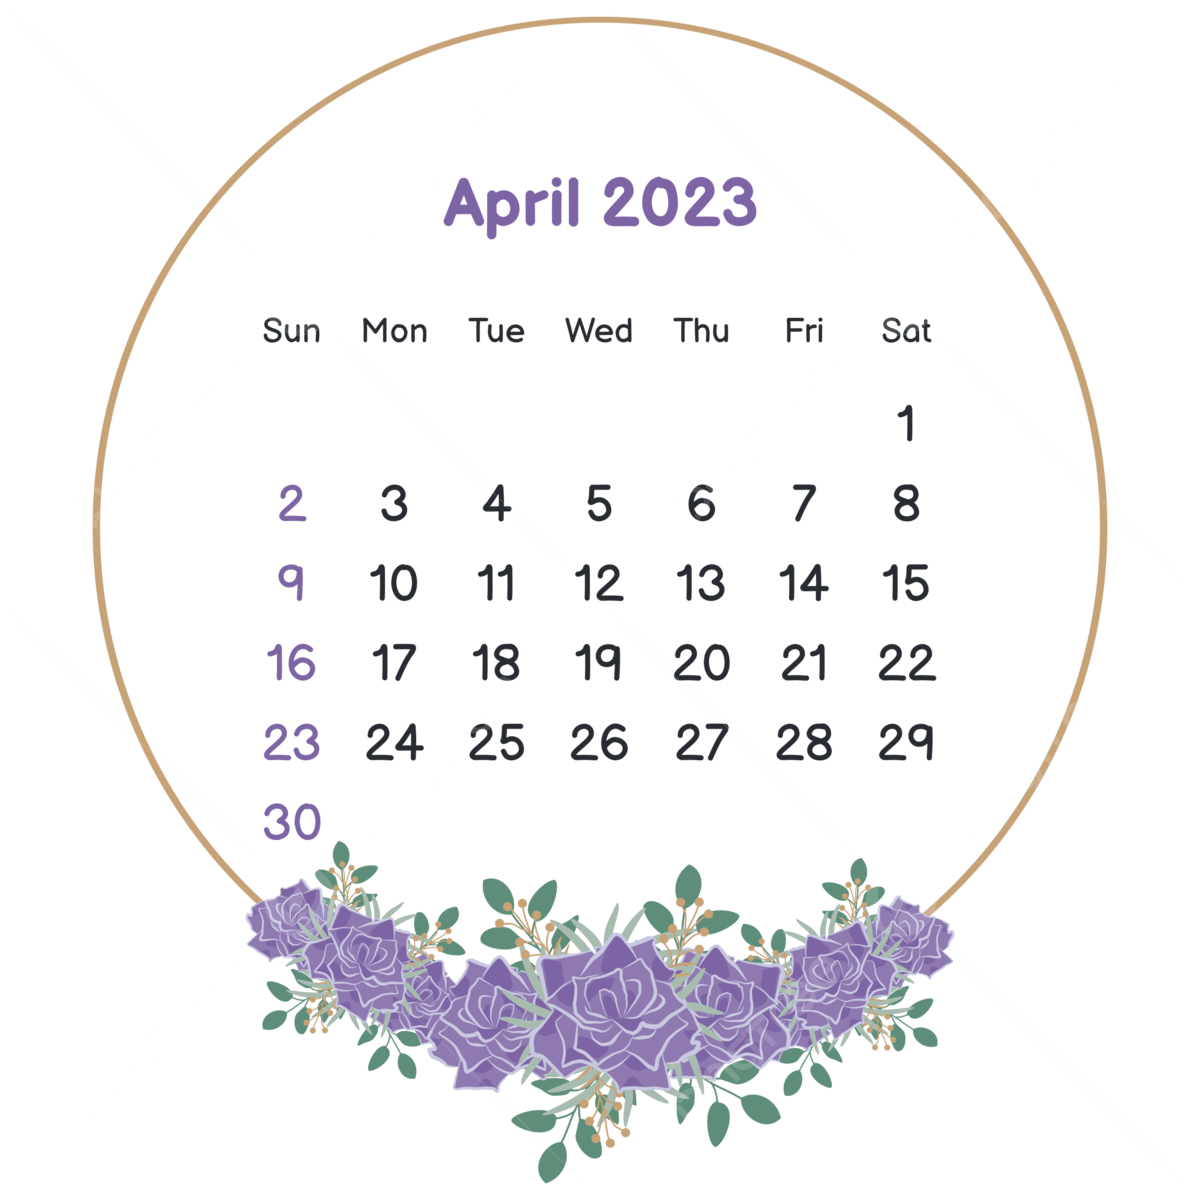 Calendar April 2023 Vector PNG Image, 2023 April Calendar With Circle Flower Frame, April, Calendar PNG Image For Free Download